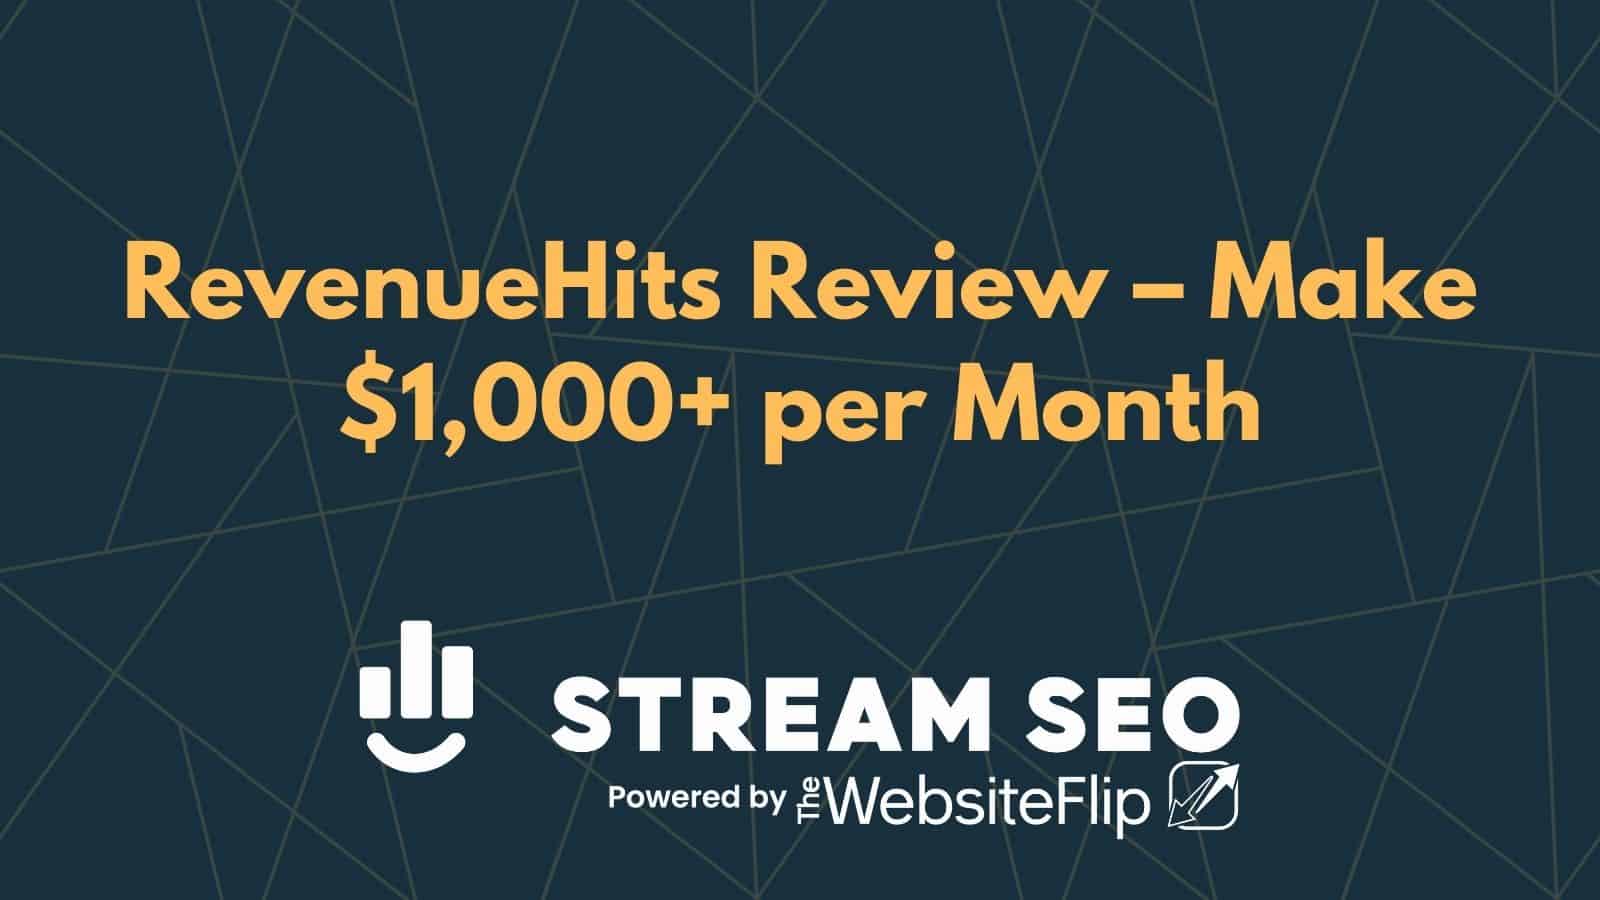 RevenueHits Review – Make $1,000+ per Month